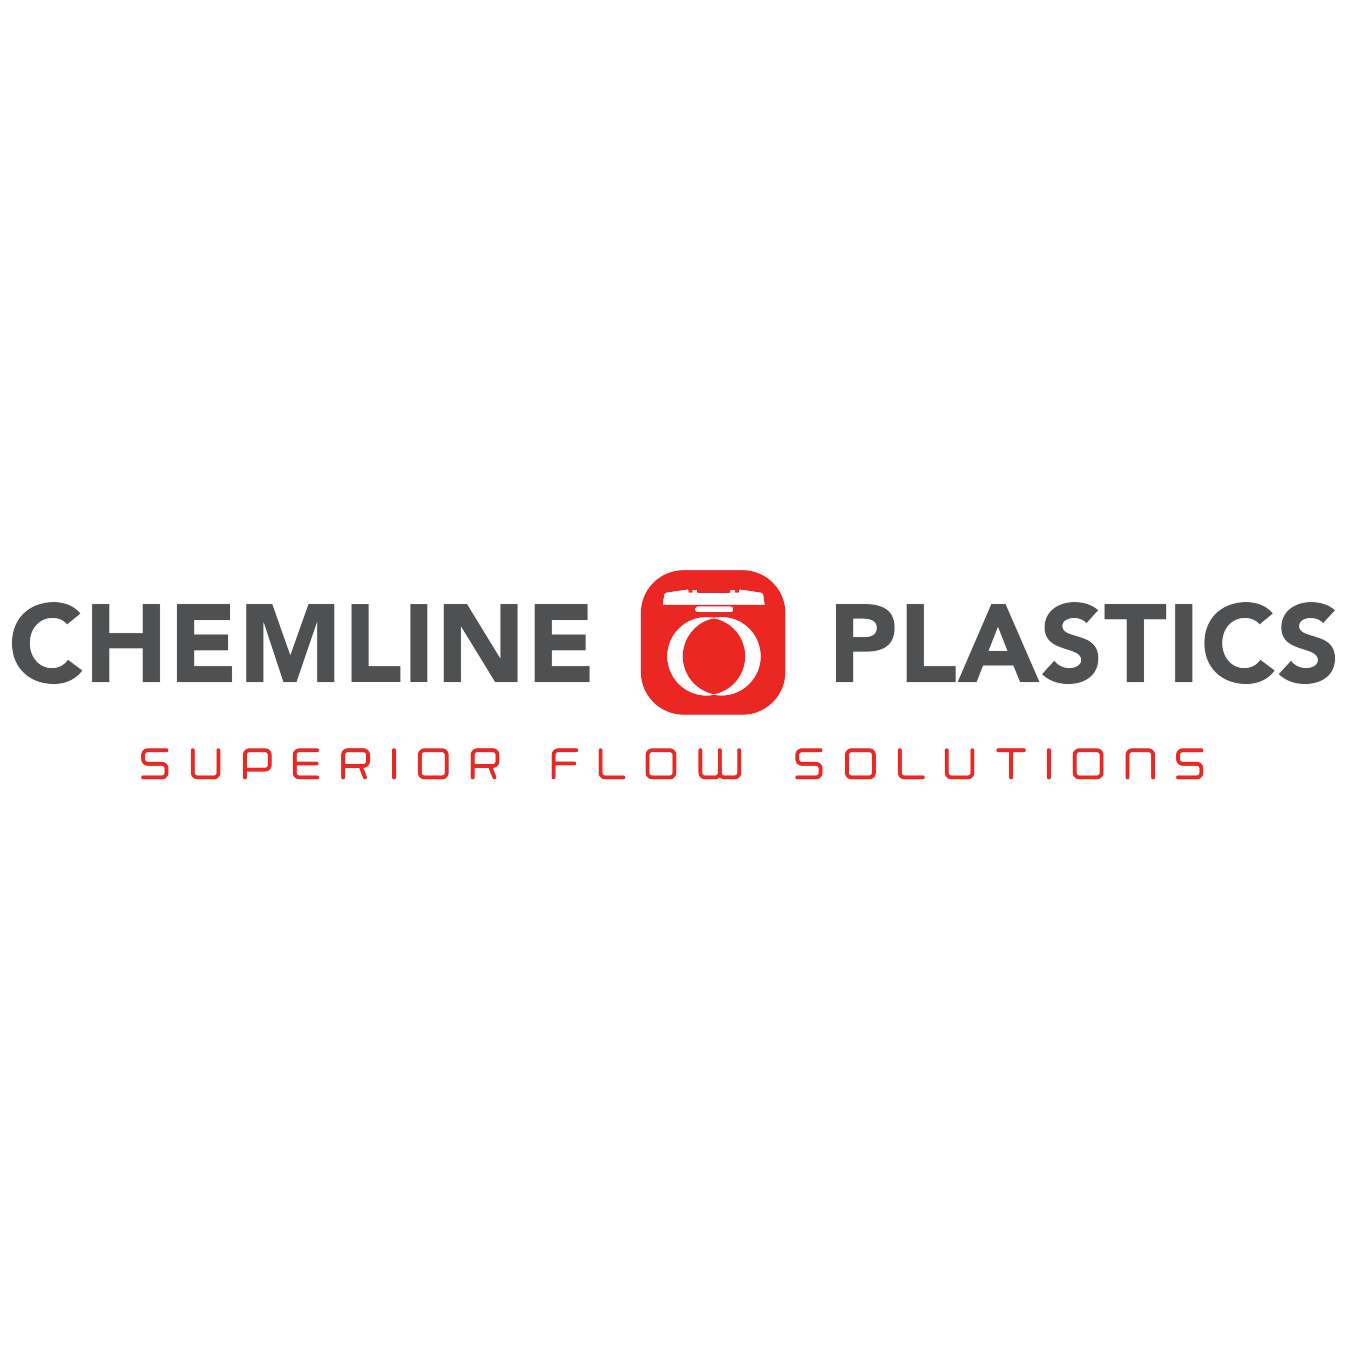 Chemline Plastics